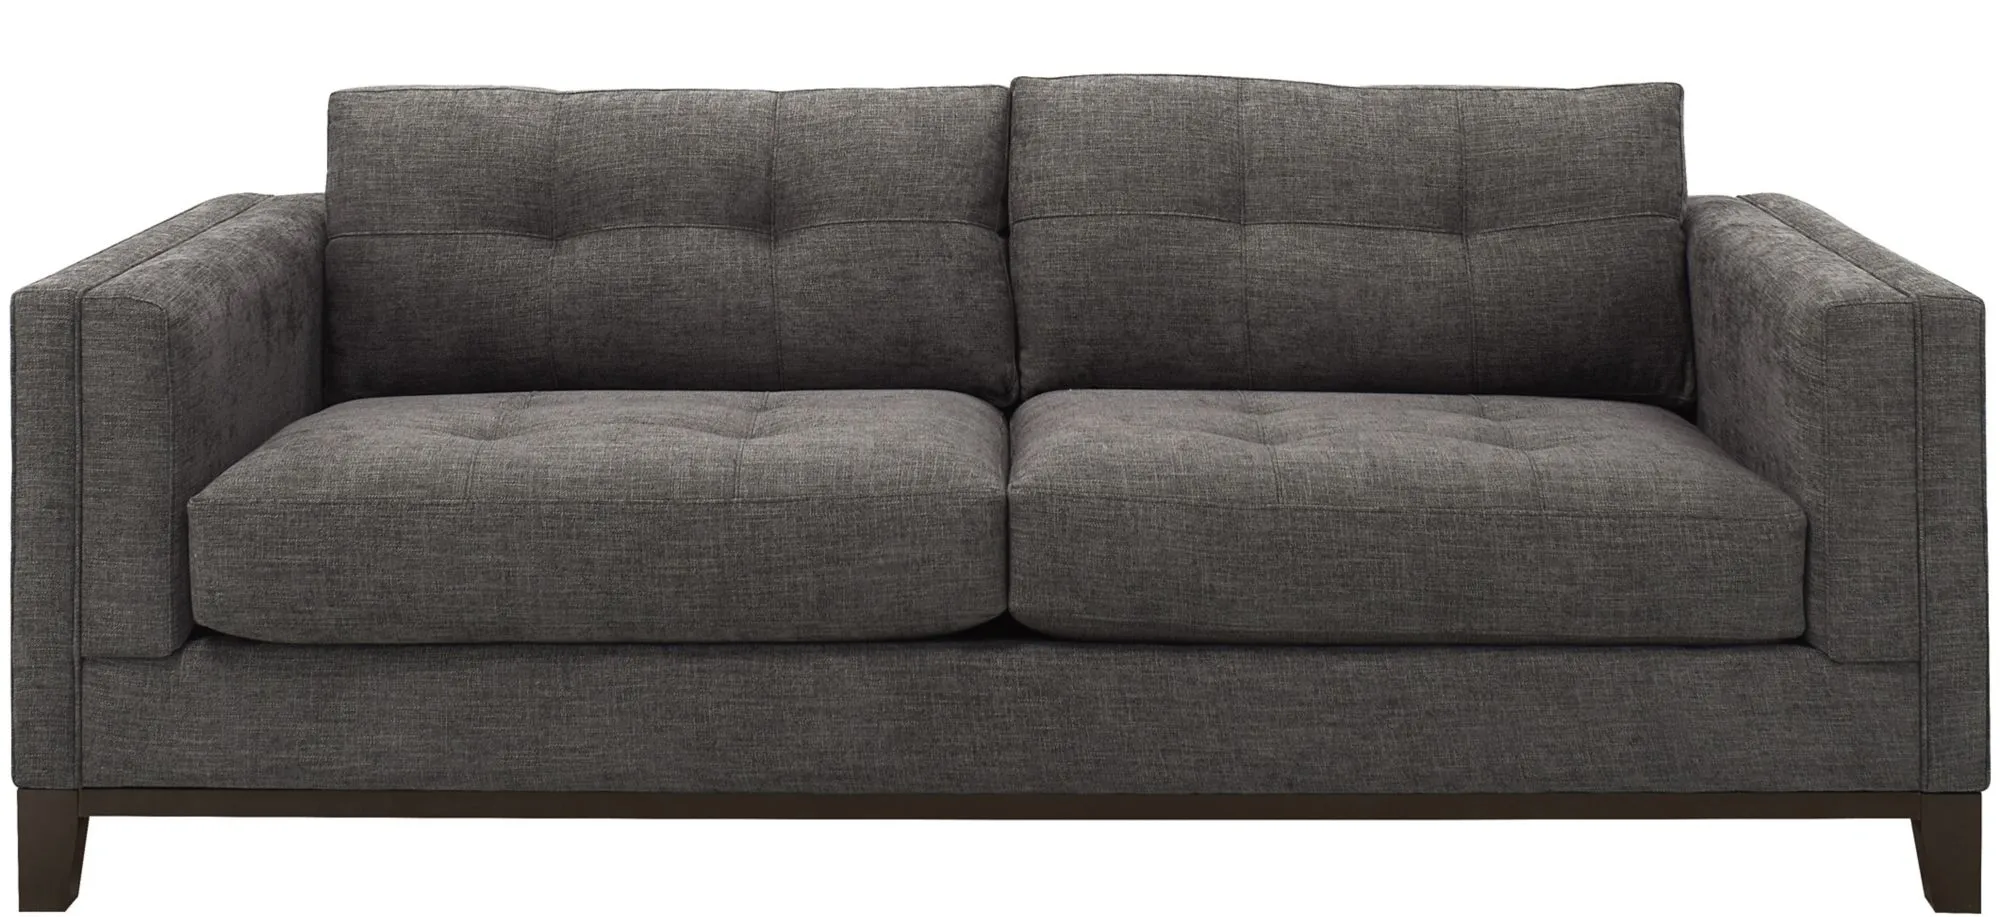 Mirasol Sofa in Elliot Graphite by H.M. Richards